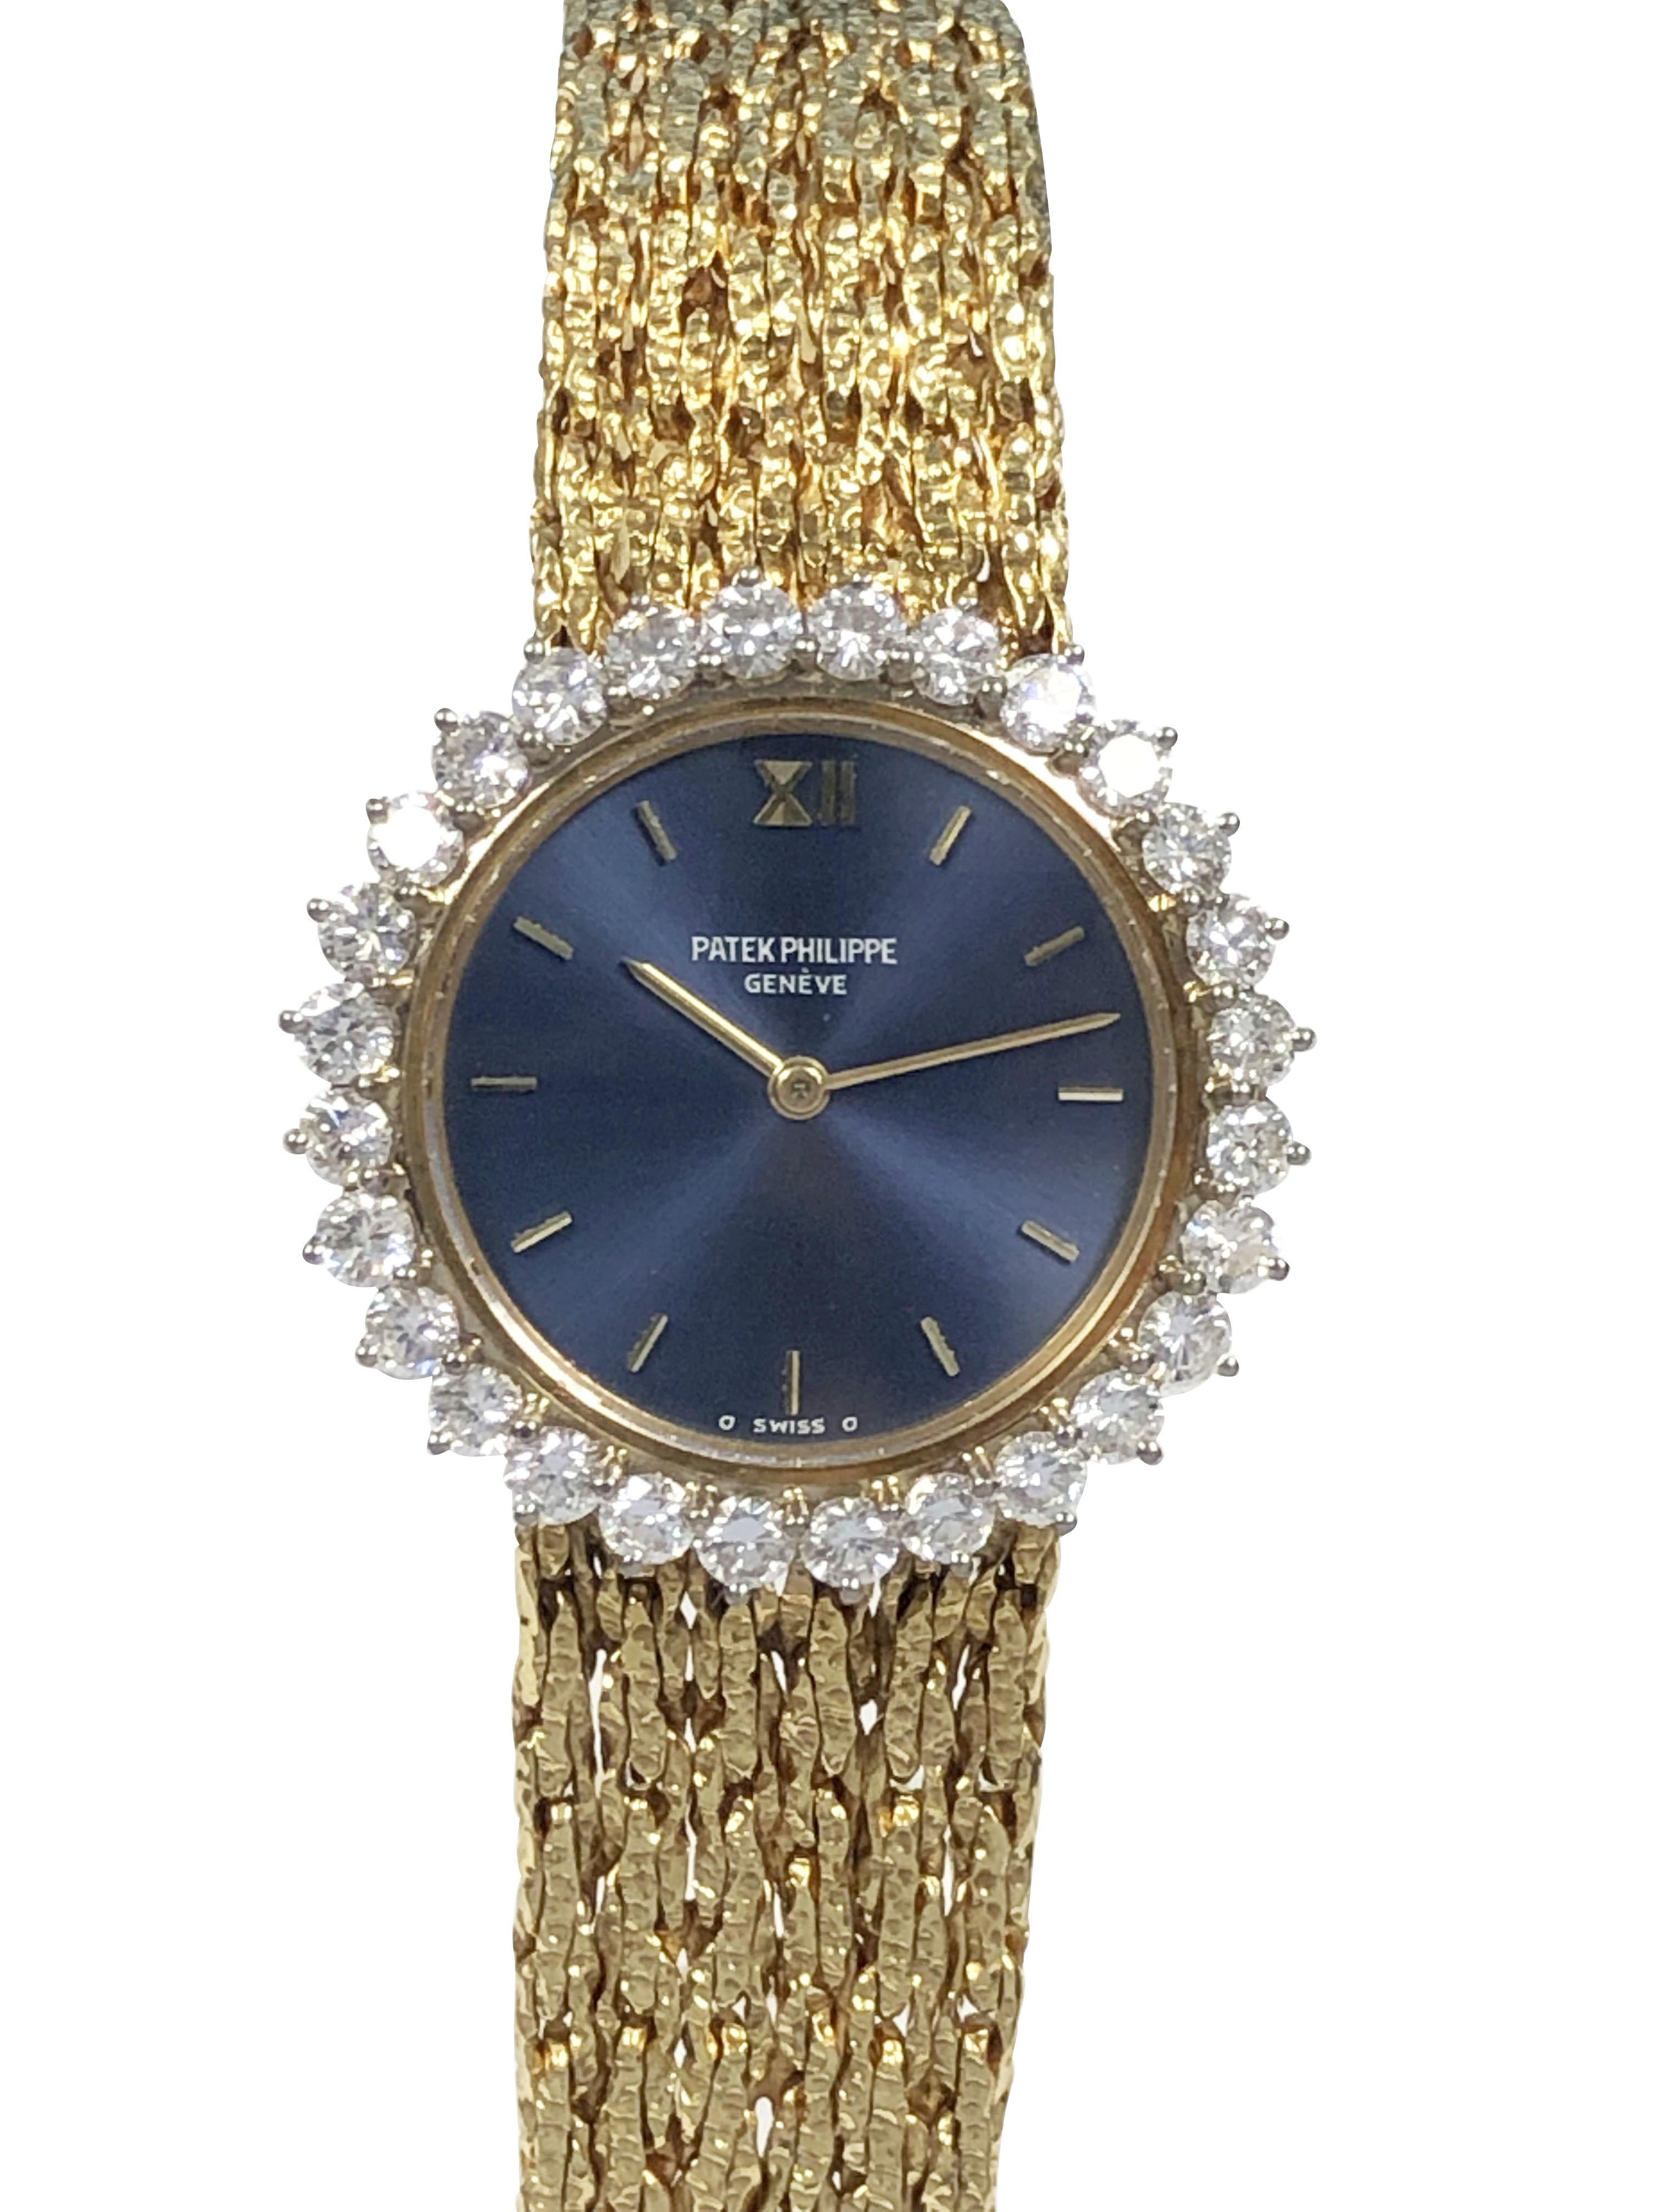 Round Cut Patek Philippe Gold and Diamonds Ladies Mechanical Wrist Watch